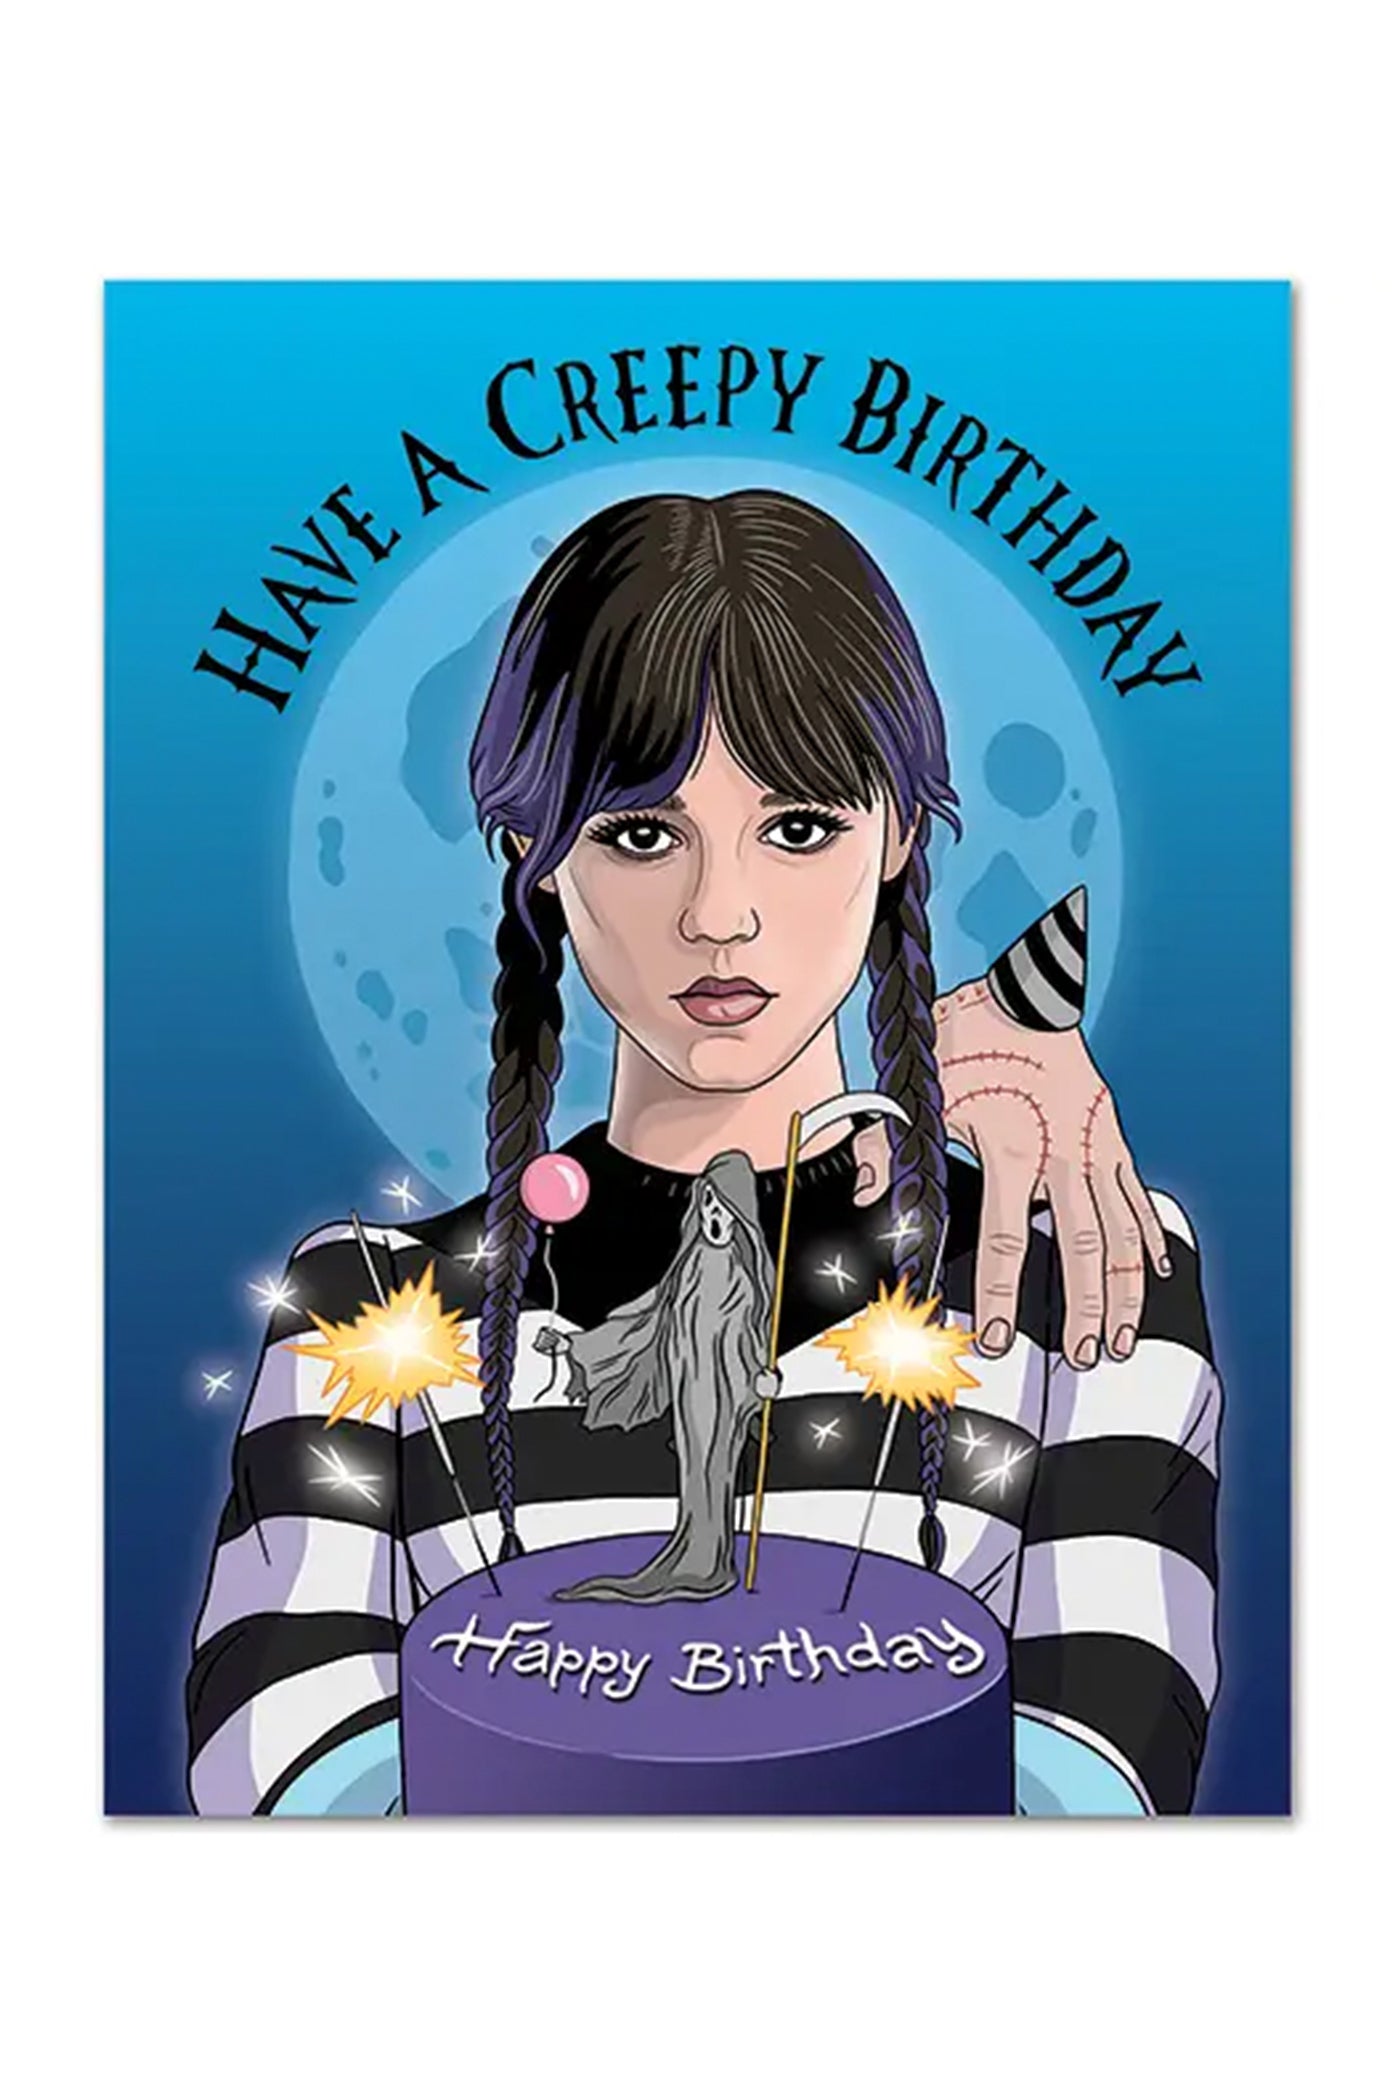 Wednesday Creepy Birthday Card by The Found